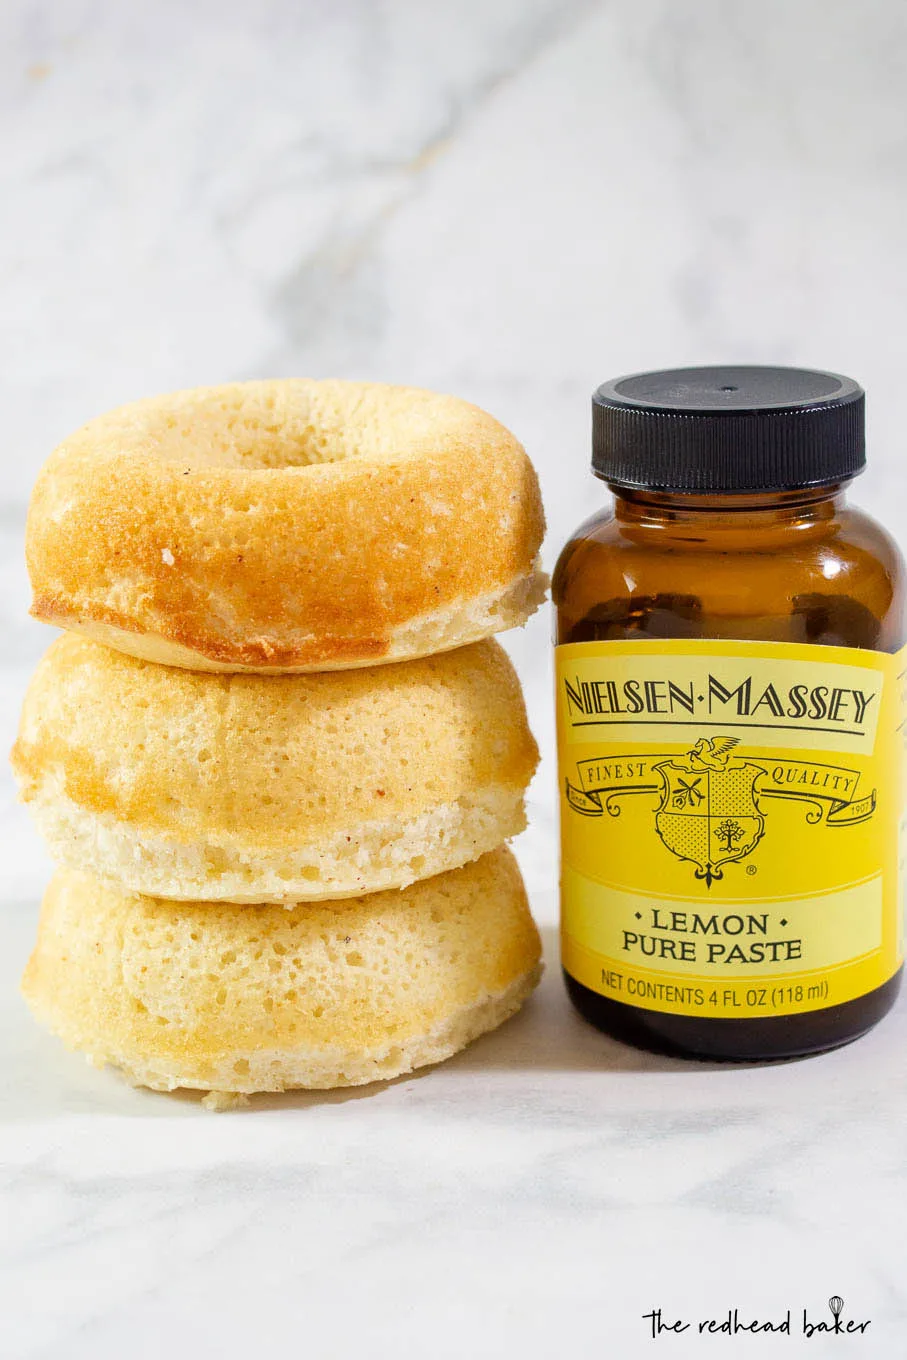 A stack of three baked lemon donuts next to a jar of Nielsen-Massey lemon paste